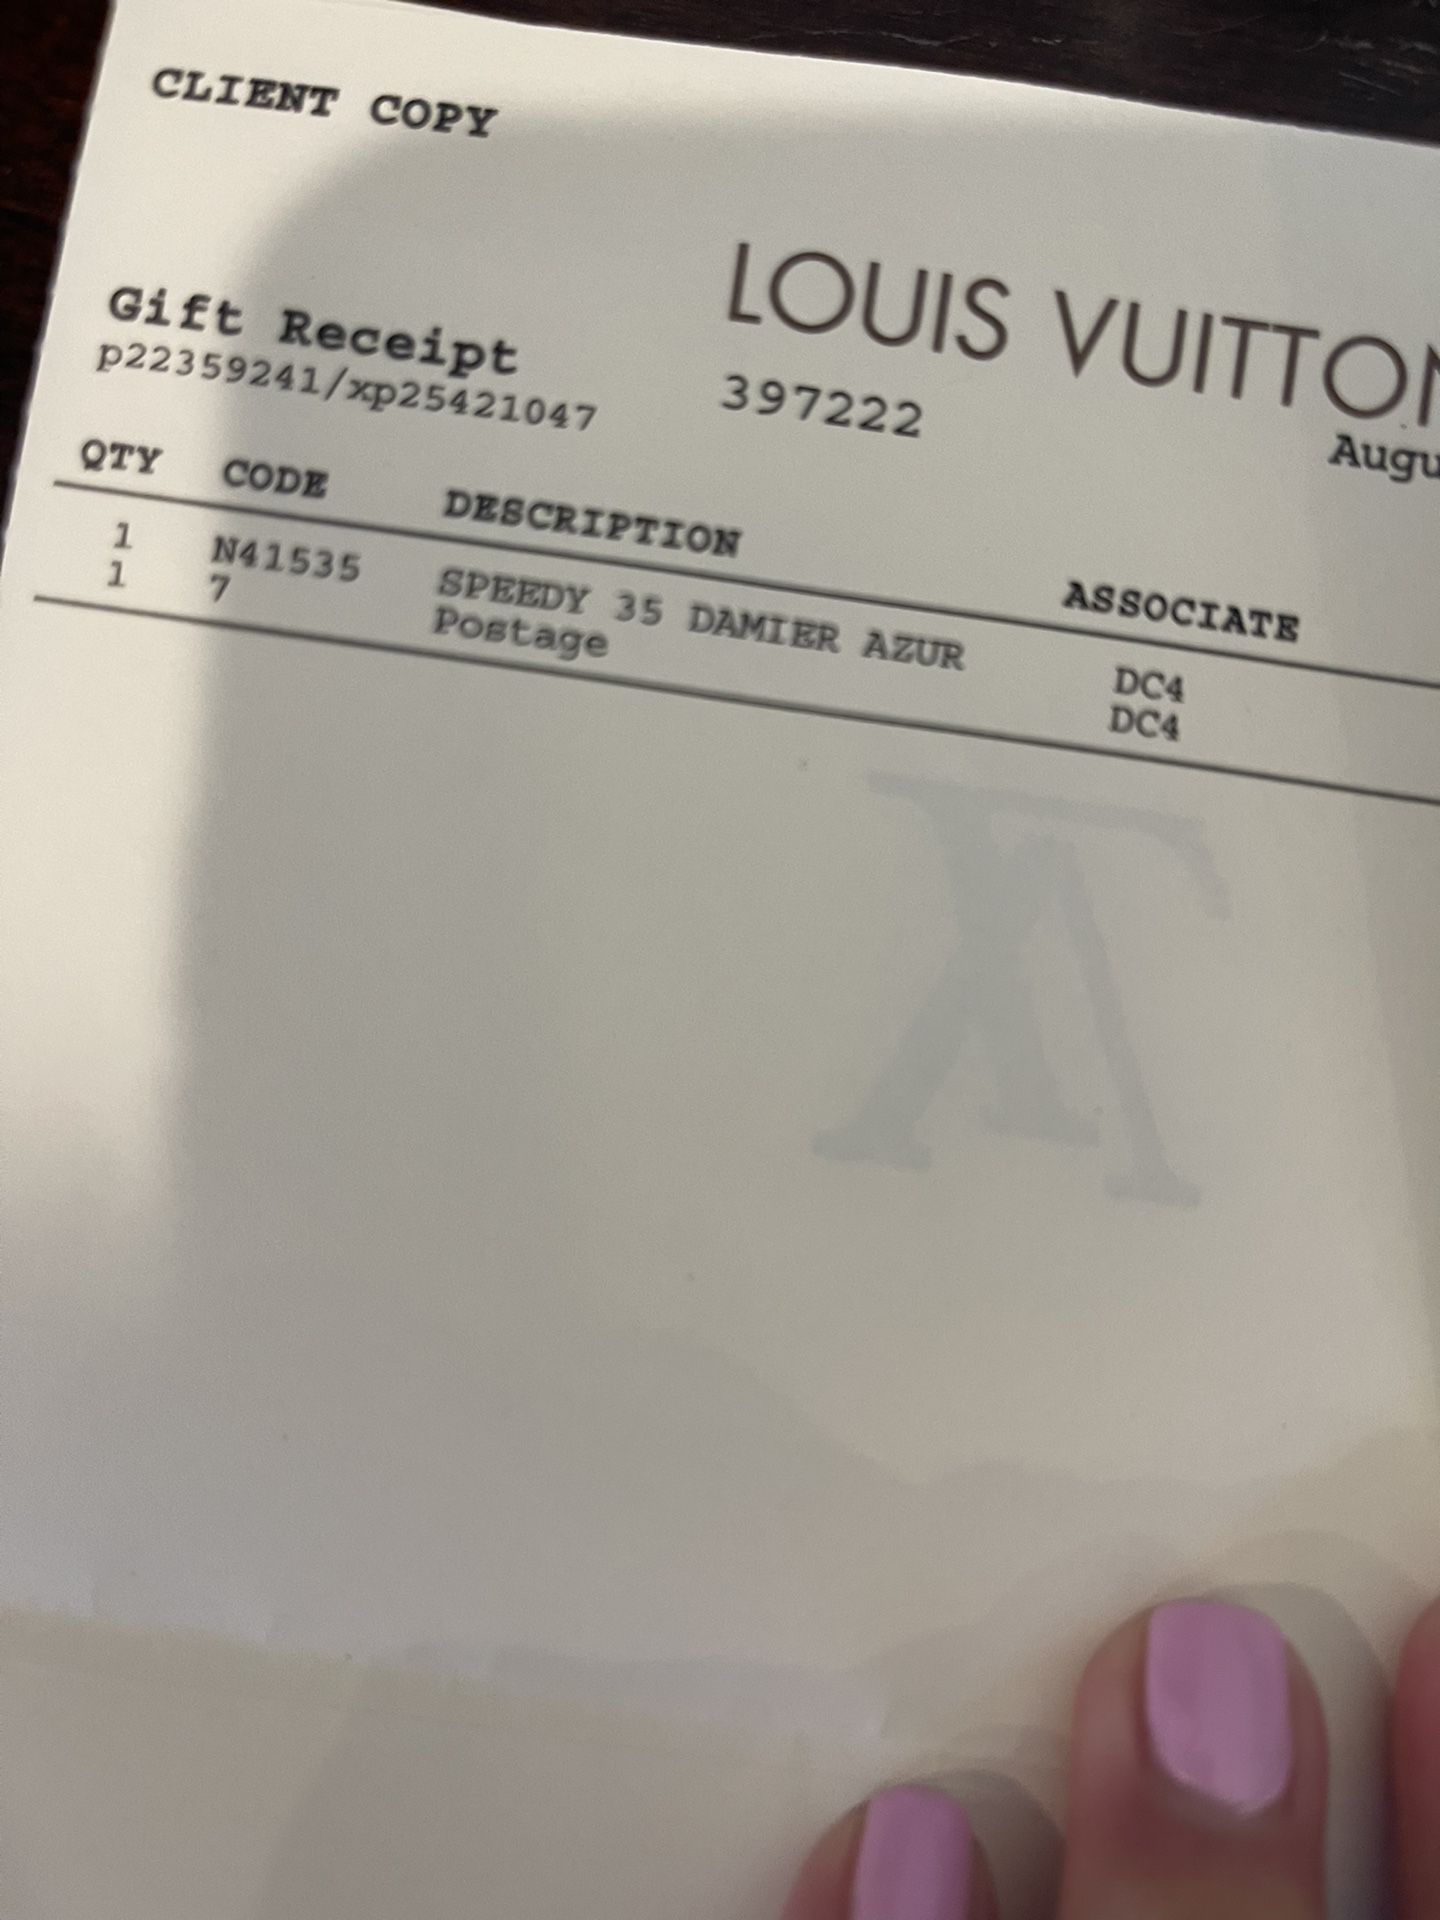 Louis Vuitton Speedy 35 Bag & Wallet 